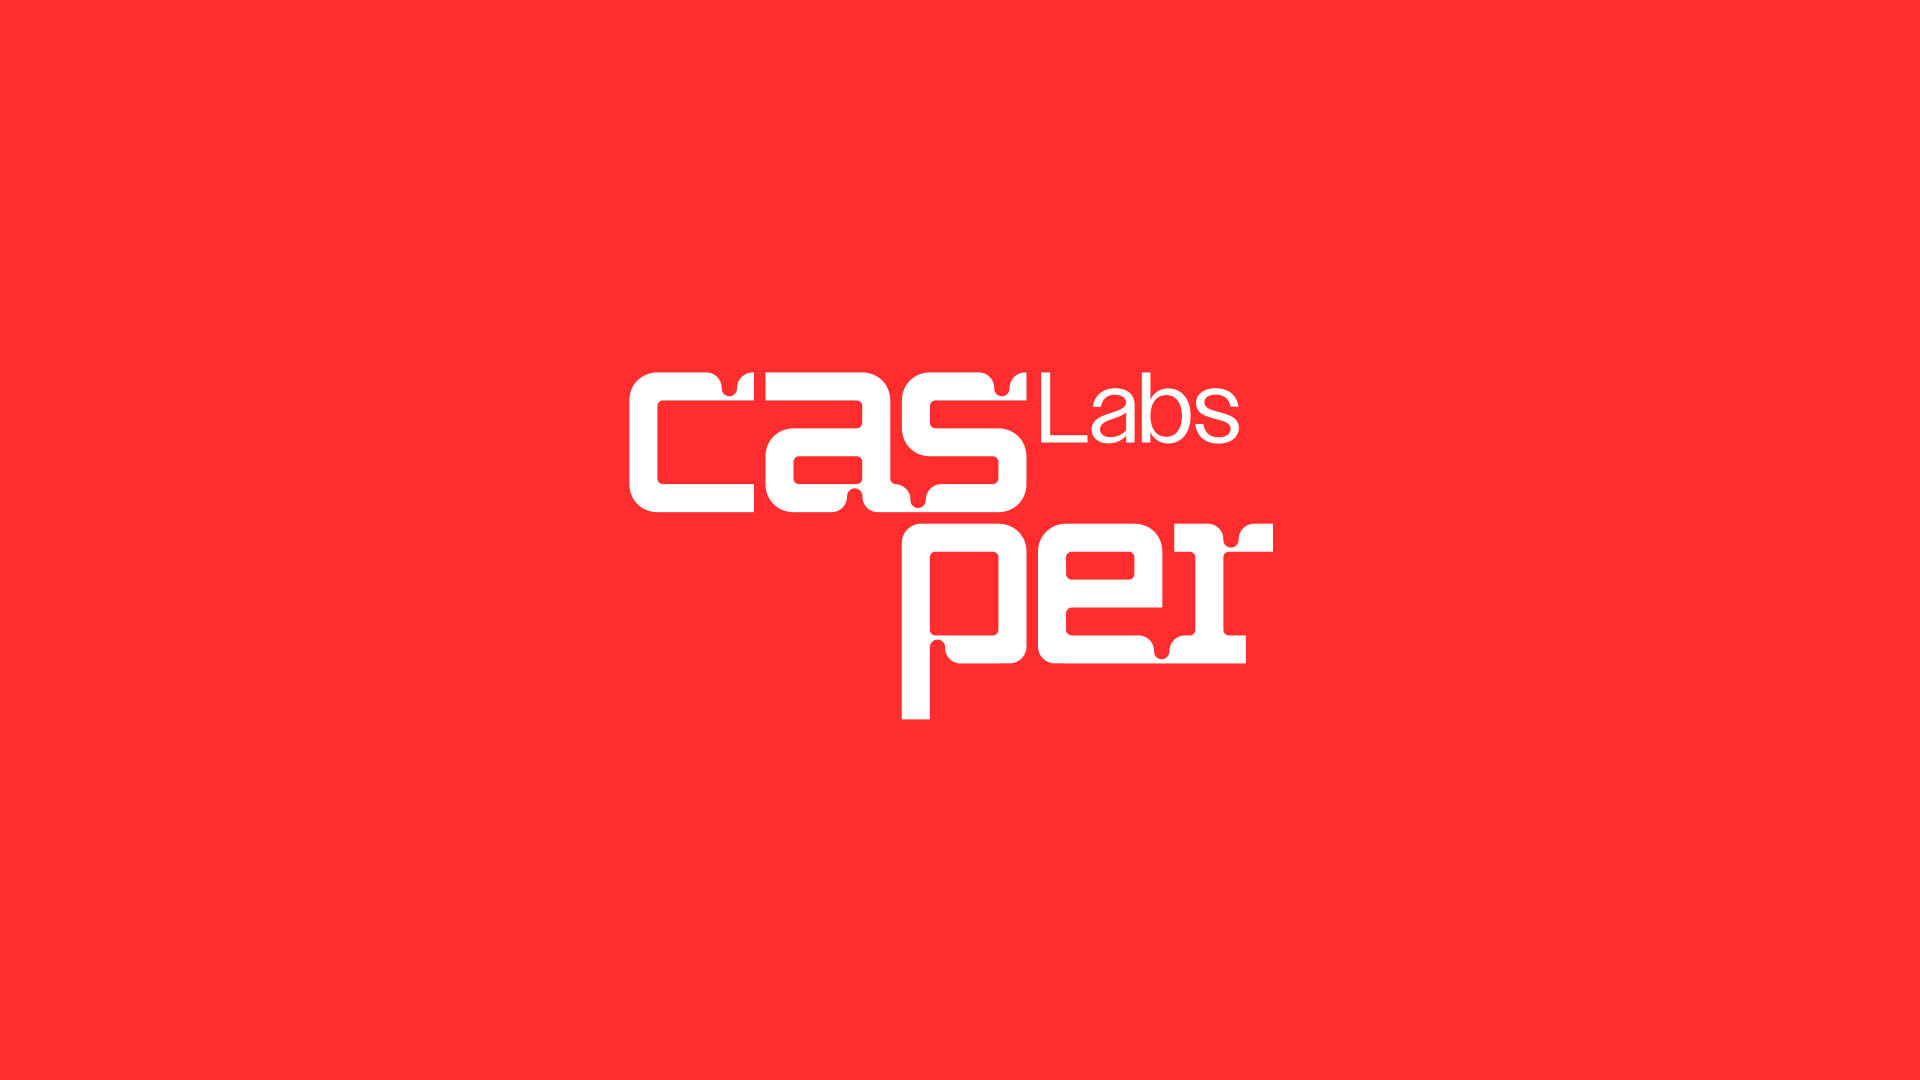 Joint Announcement from Casper Labs and Vlad Zamfir